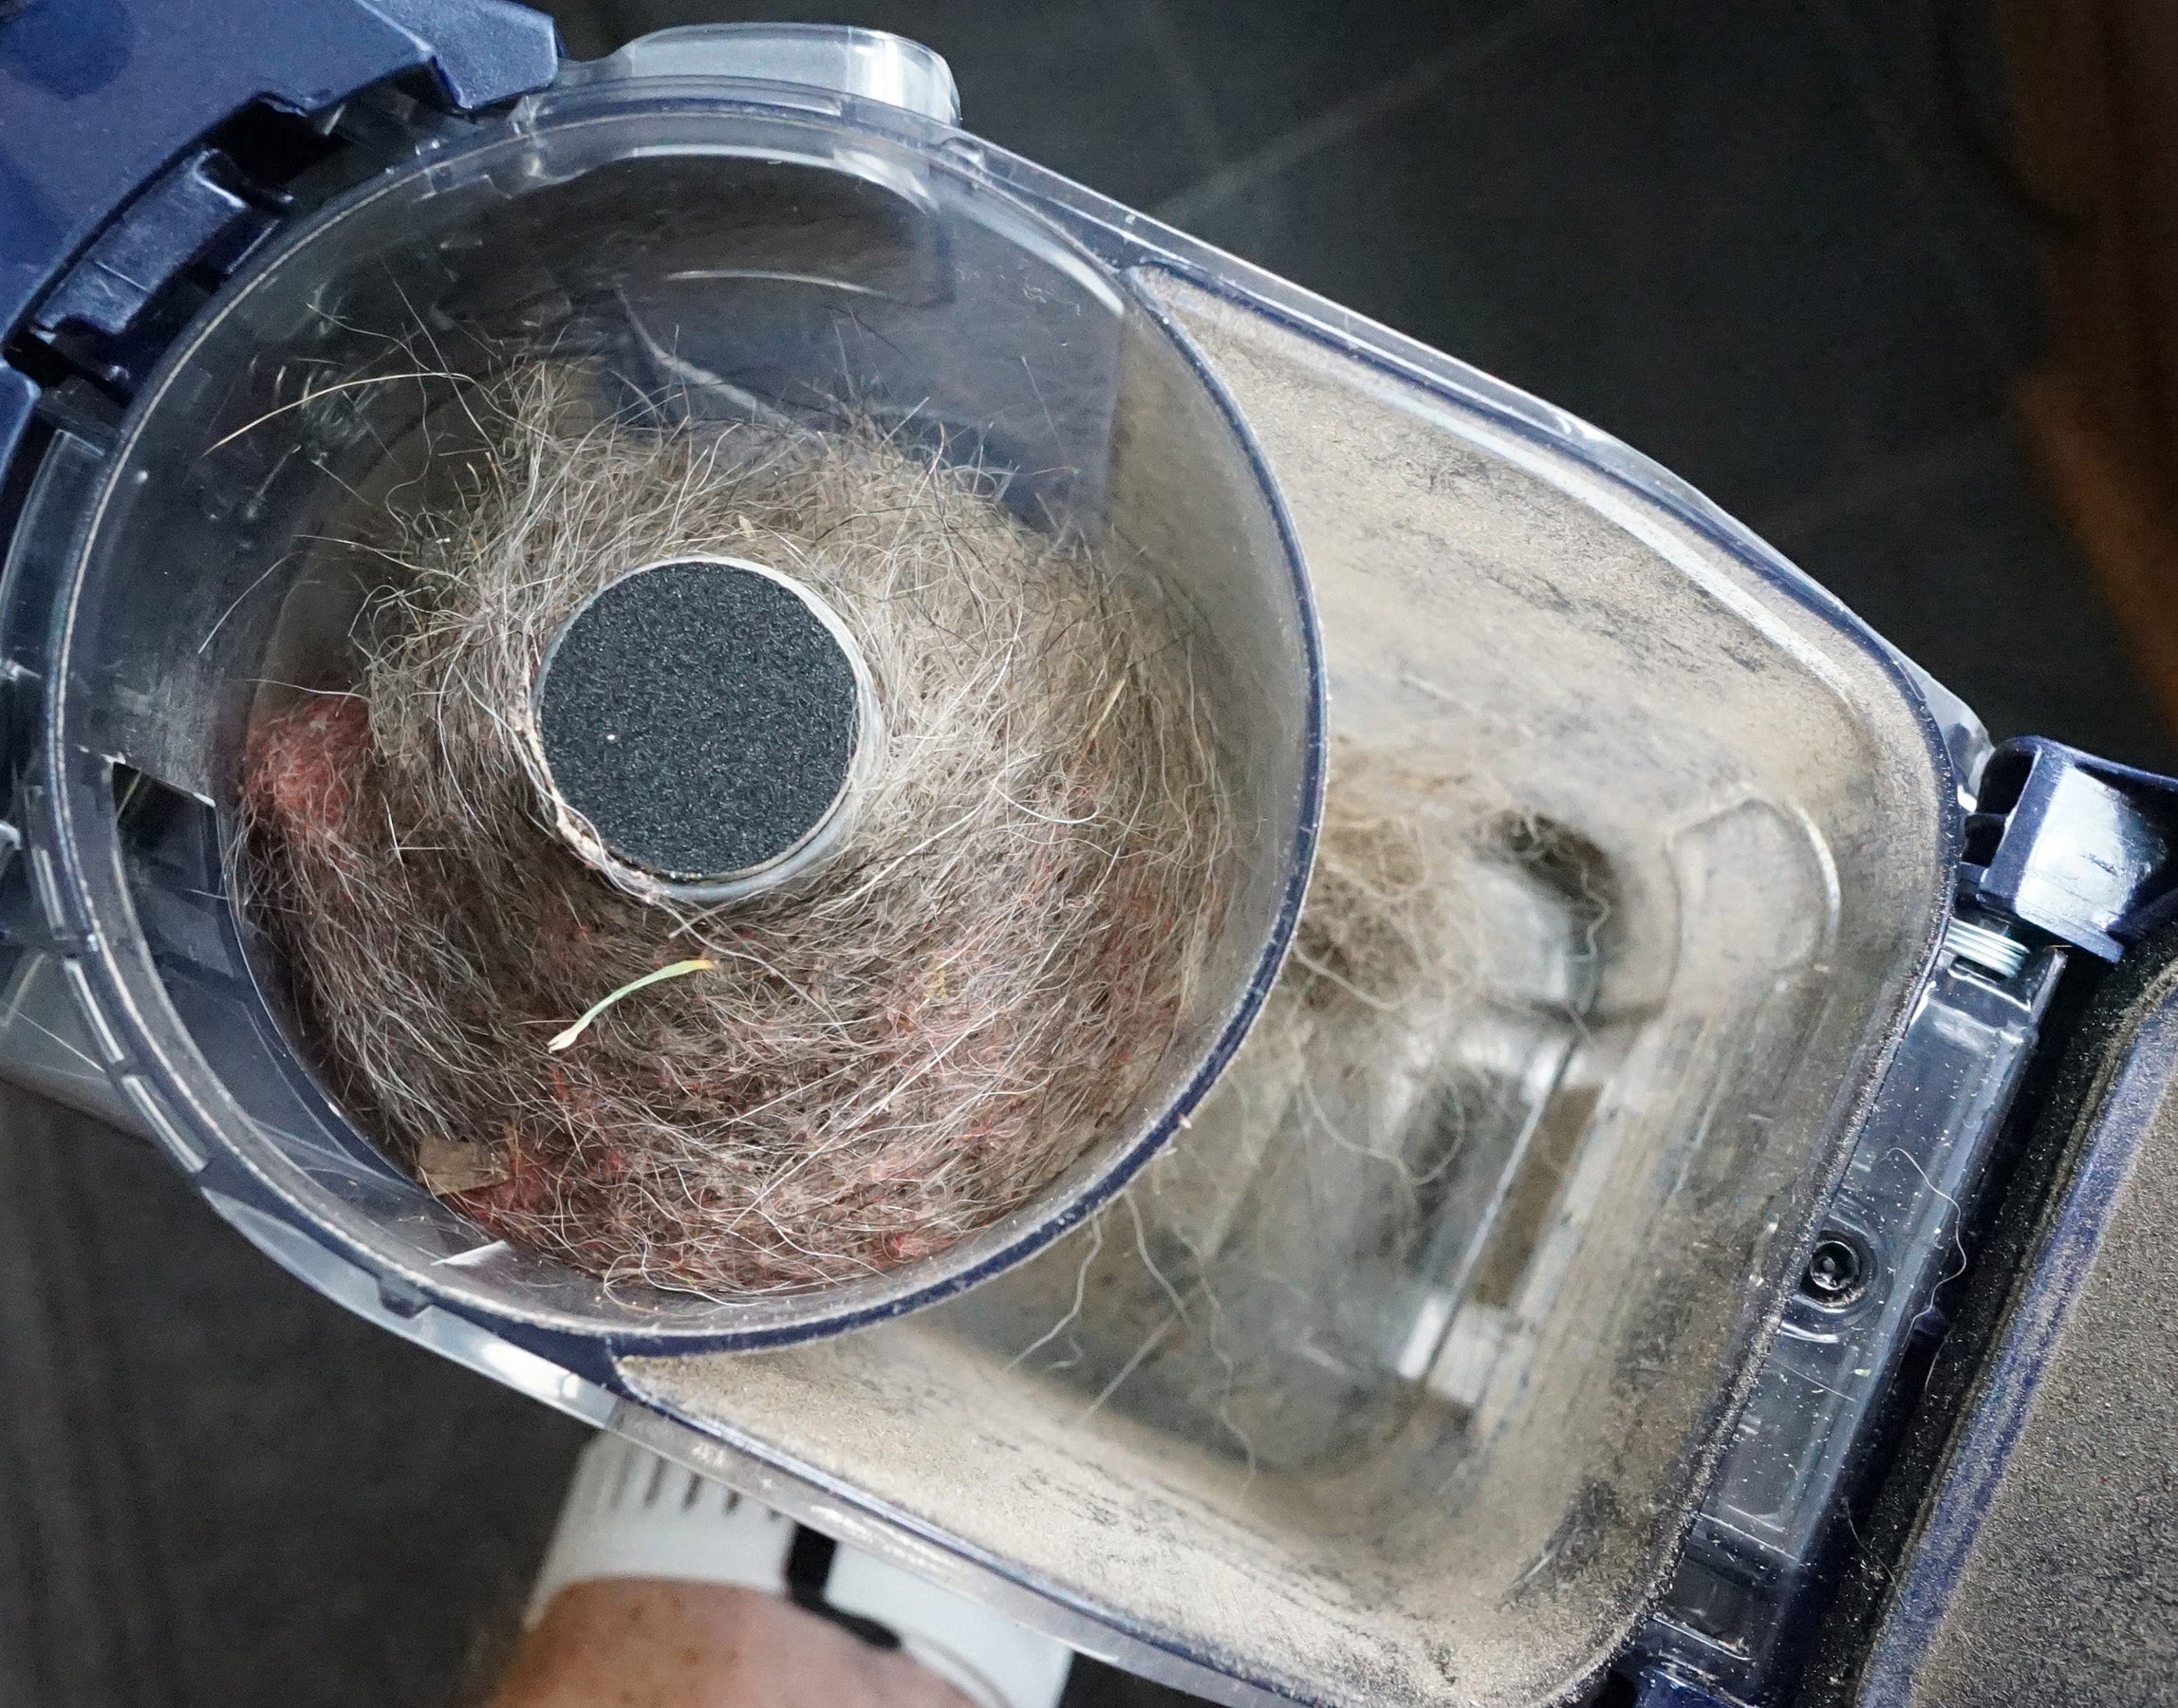 Dust compartment of Shark DuoClean Vacuum full of pet hair.